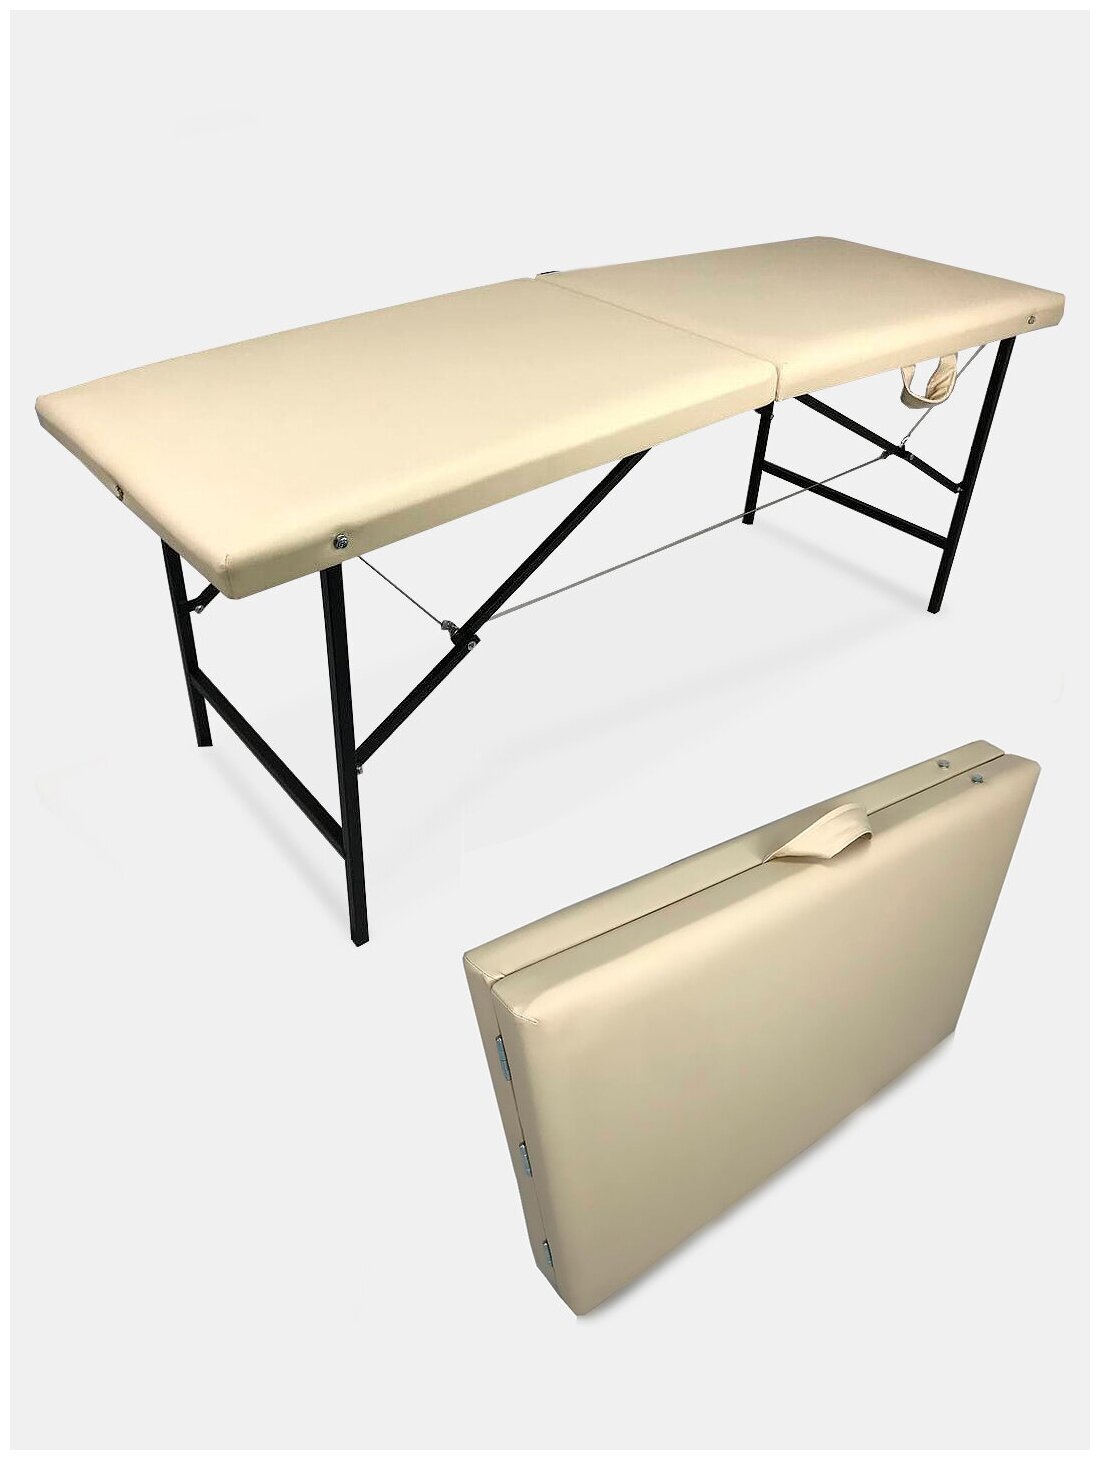 Массажный стол складной 180х60х72 см бежевый. Стол для массажа. Кушетка складная массажная.